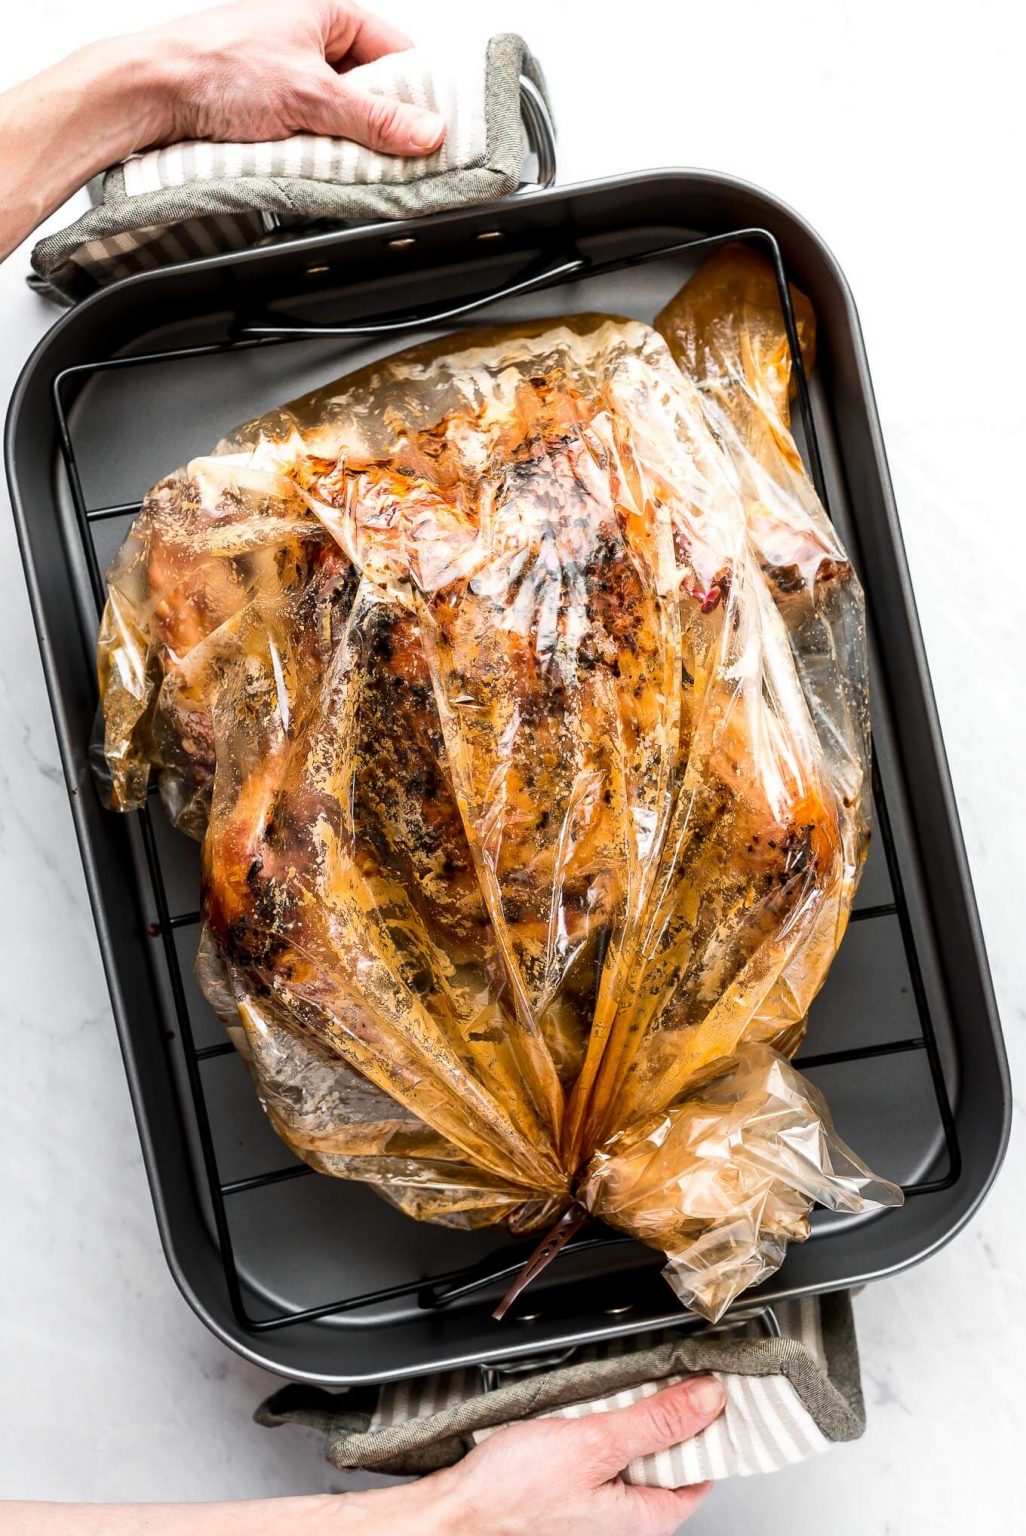 Roast Turkey In a Bag - Garnish & Glaze